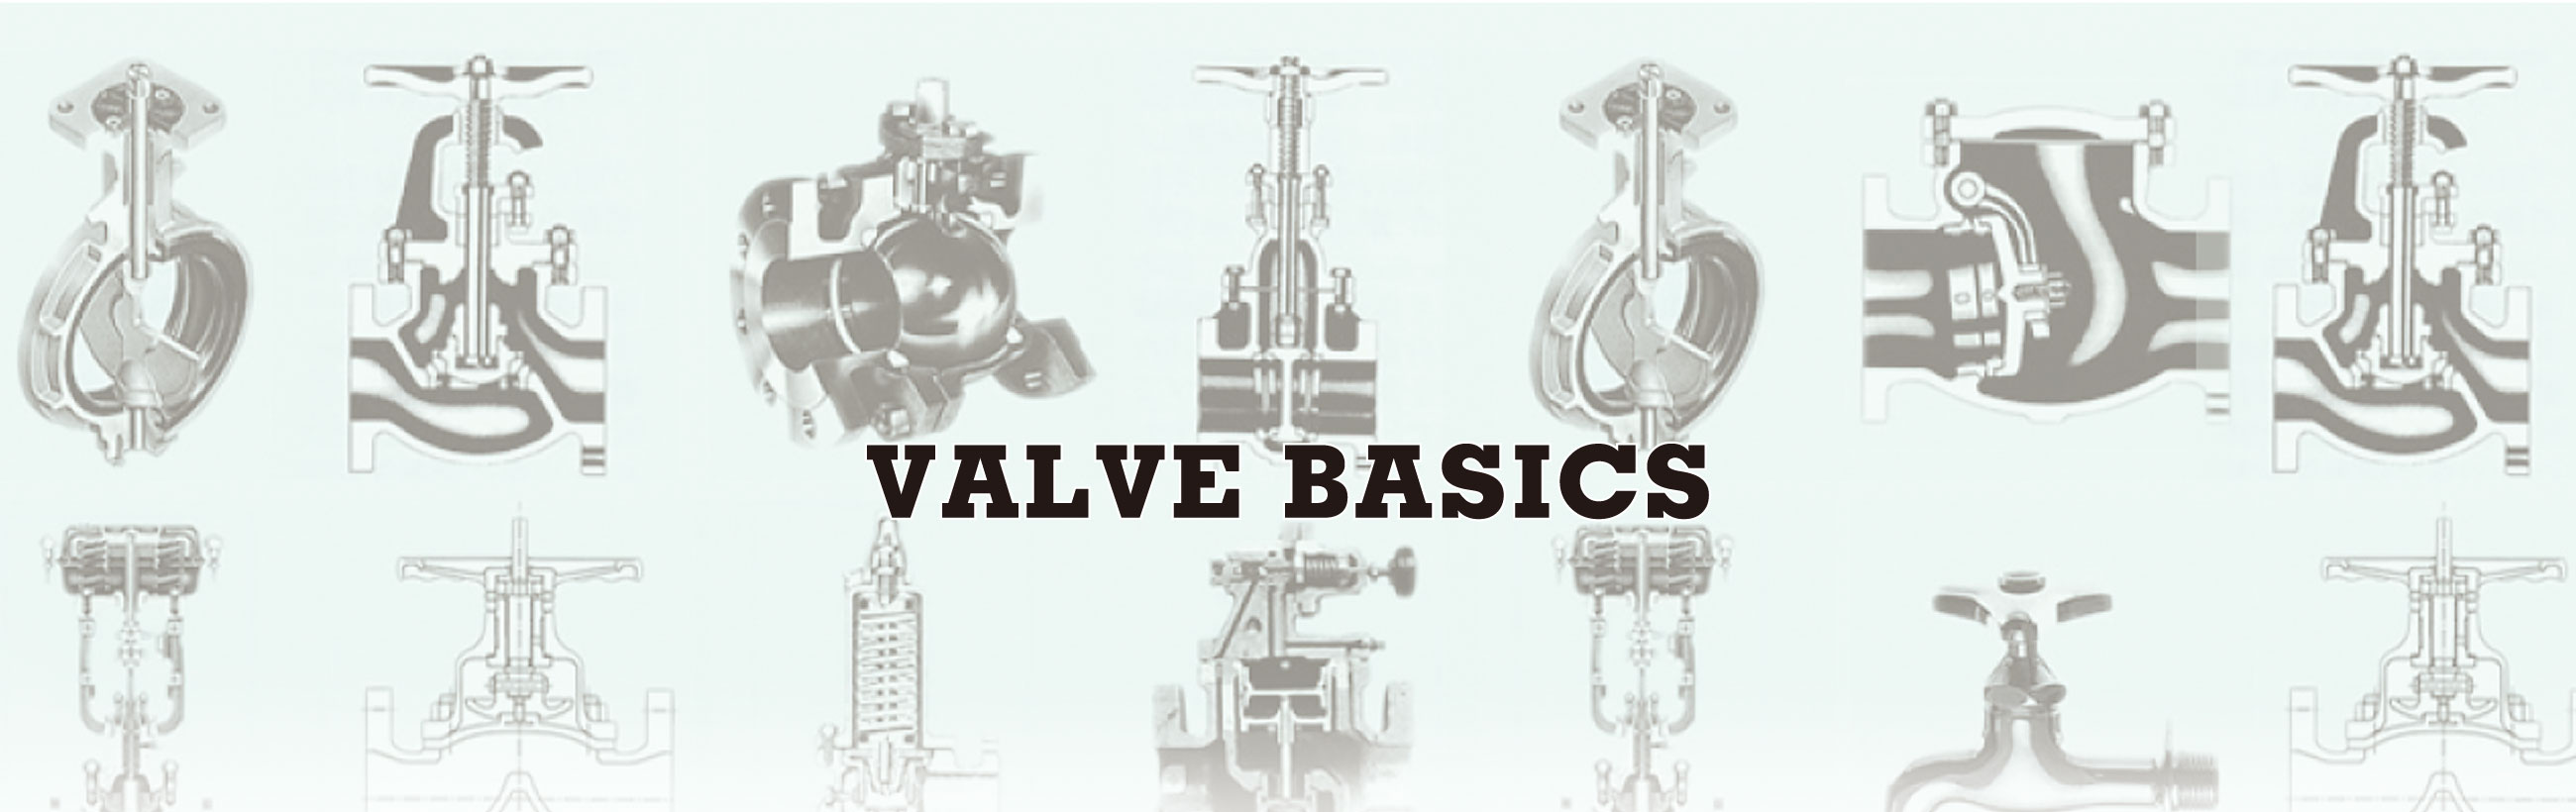 Valve Basics